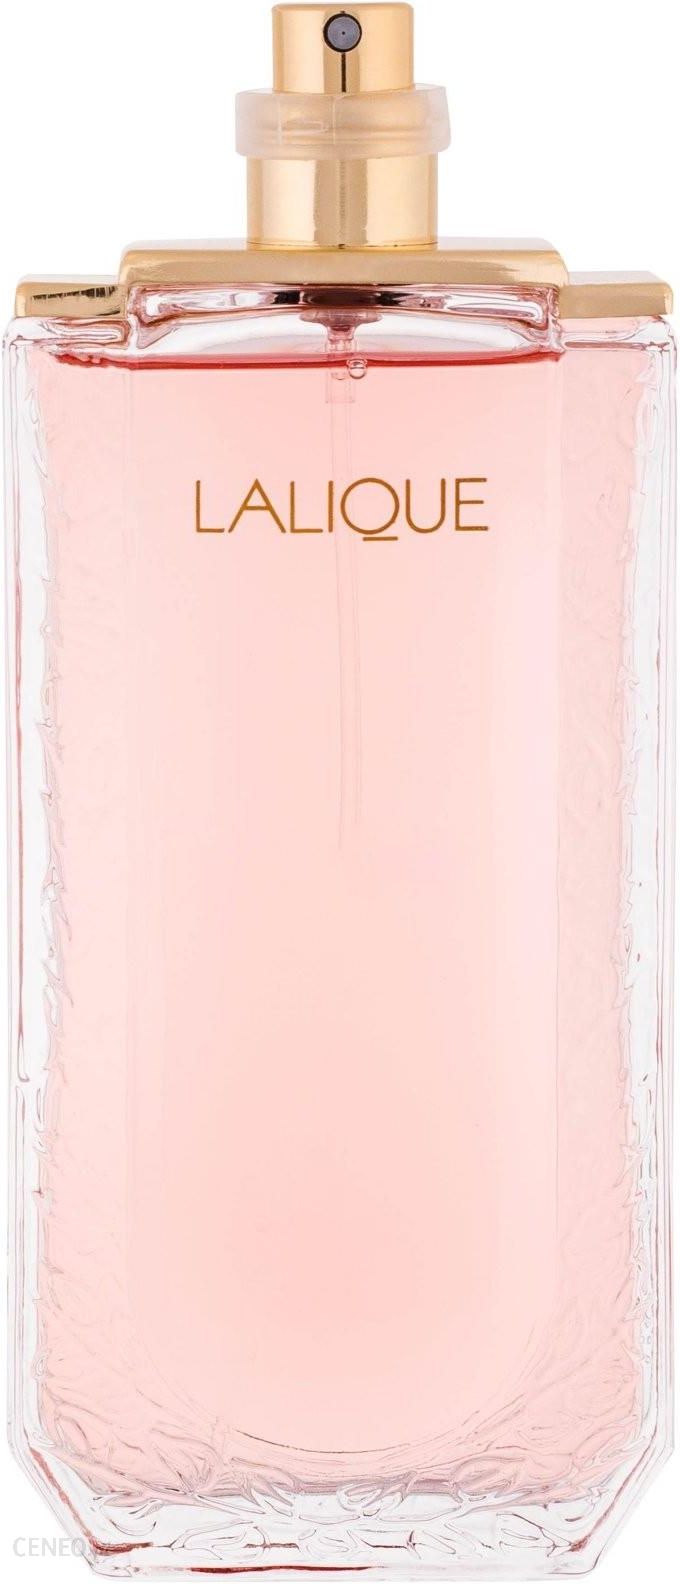 Lalique lalique woda perfumowana 100ml tester